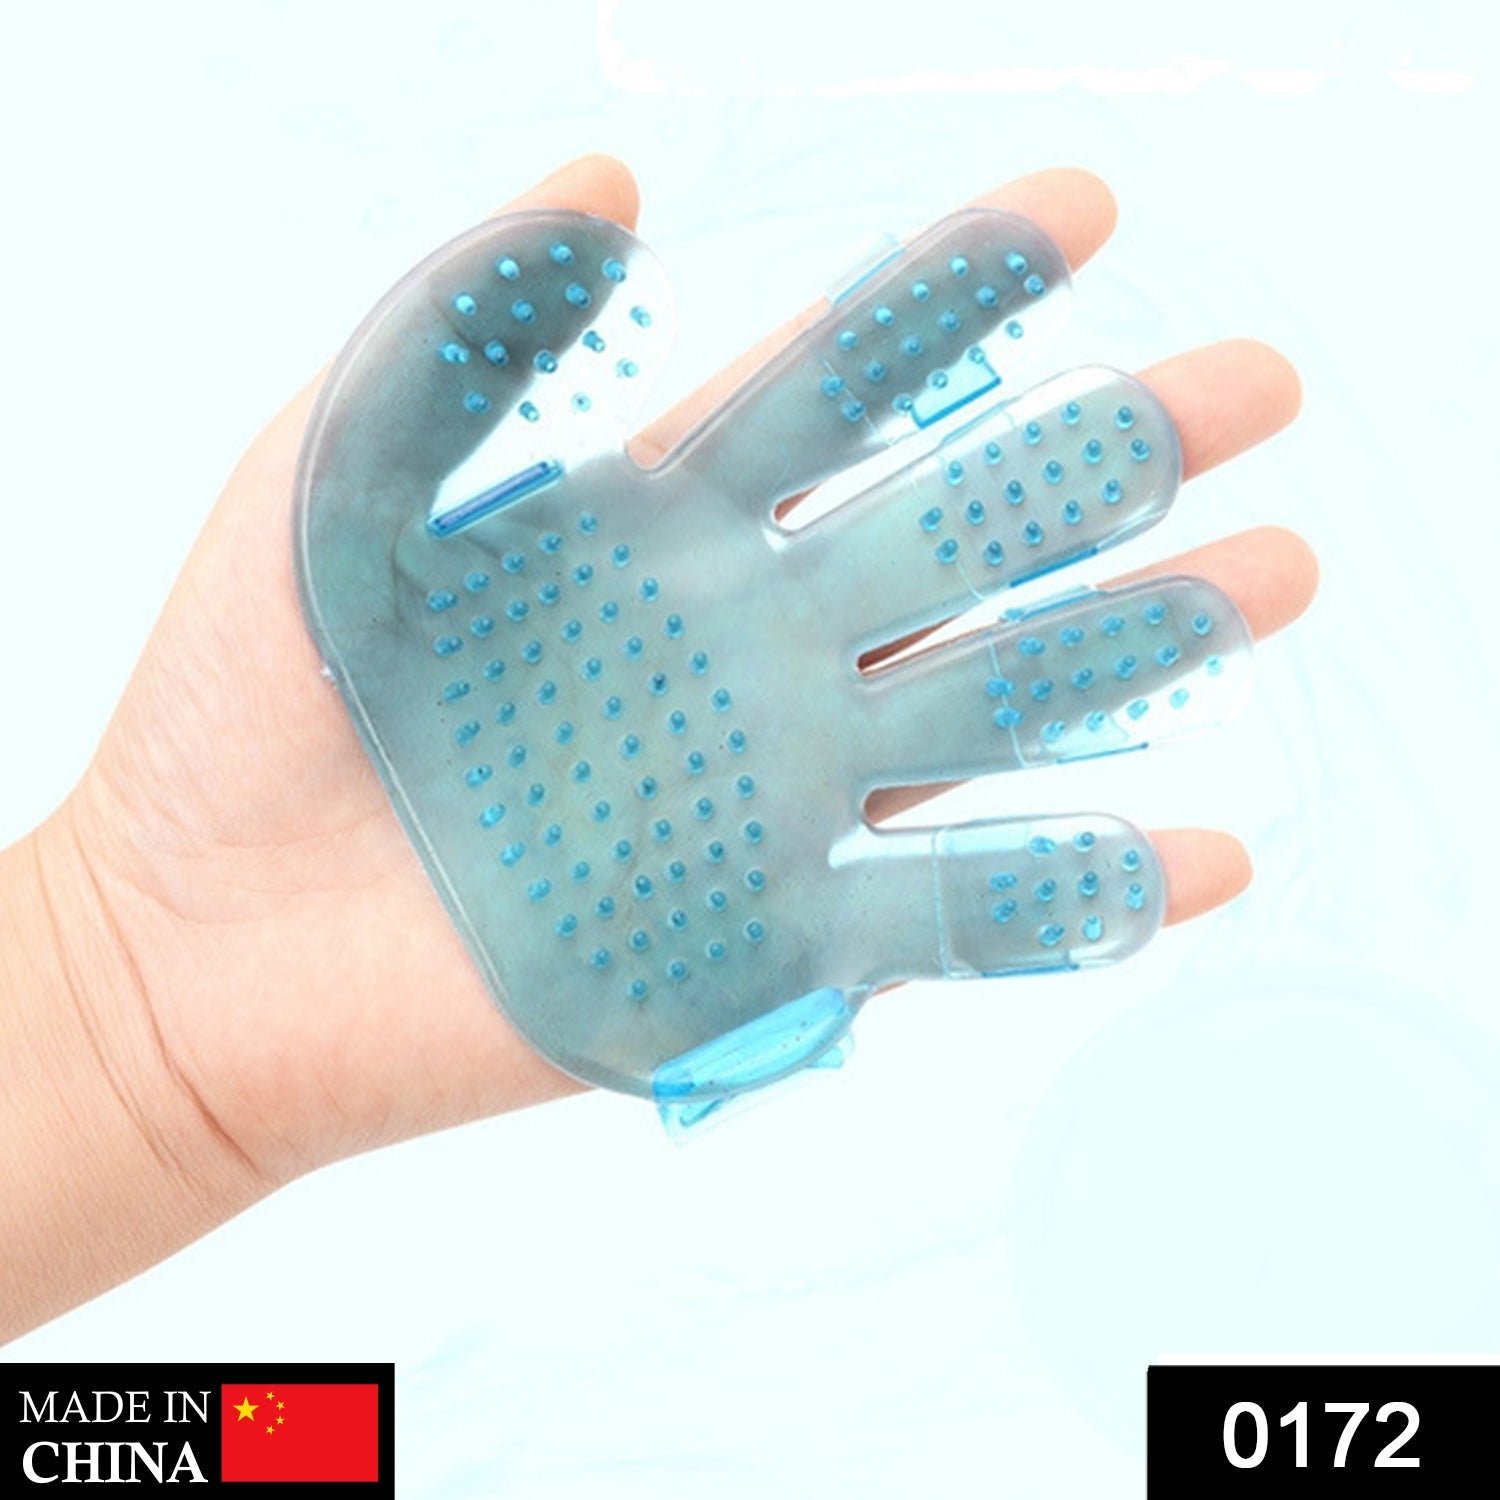 172 Rubber Pet Cleaning Massaging Grooming Glove Brush DeoDap